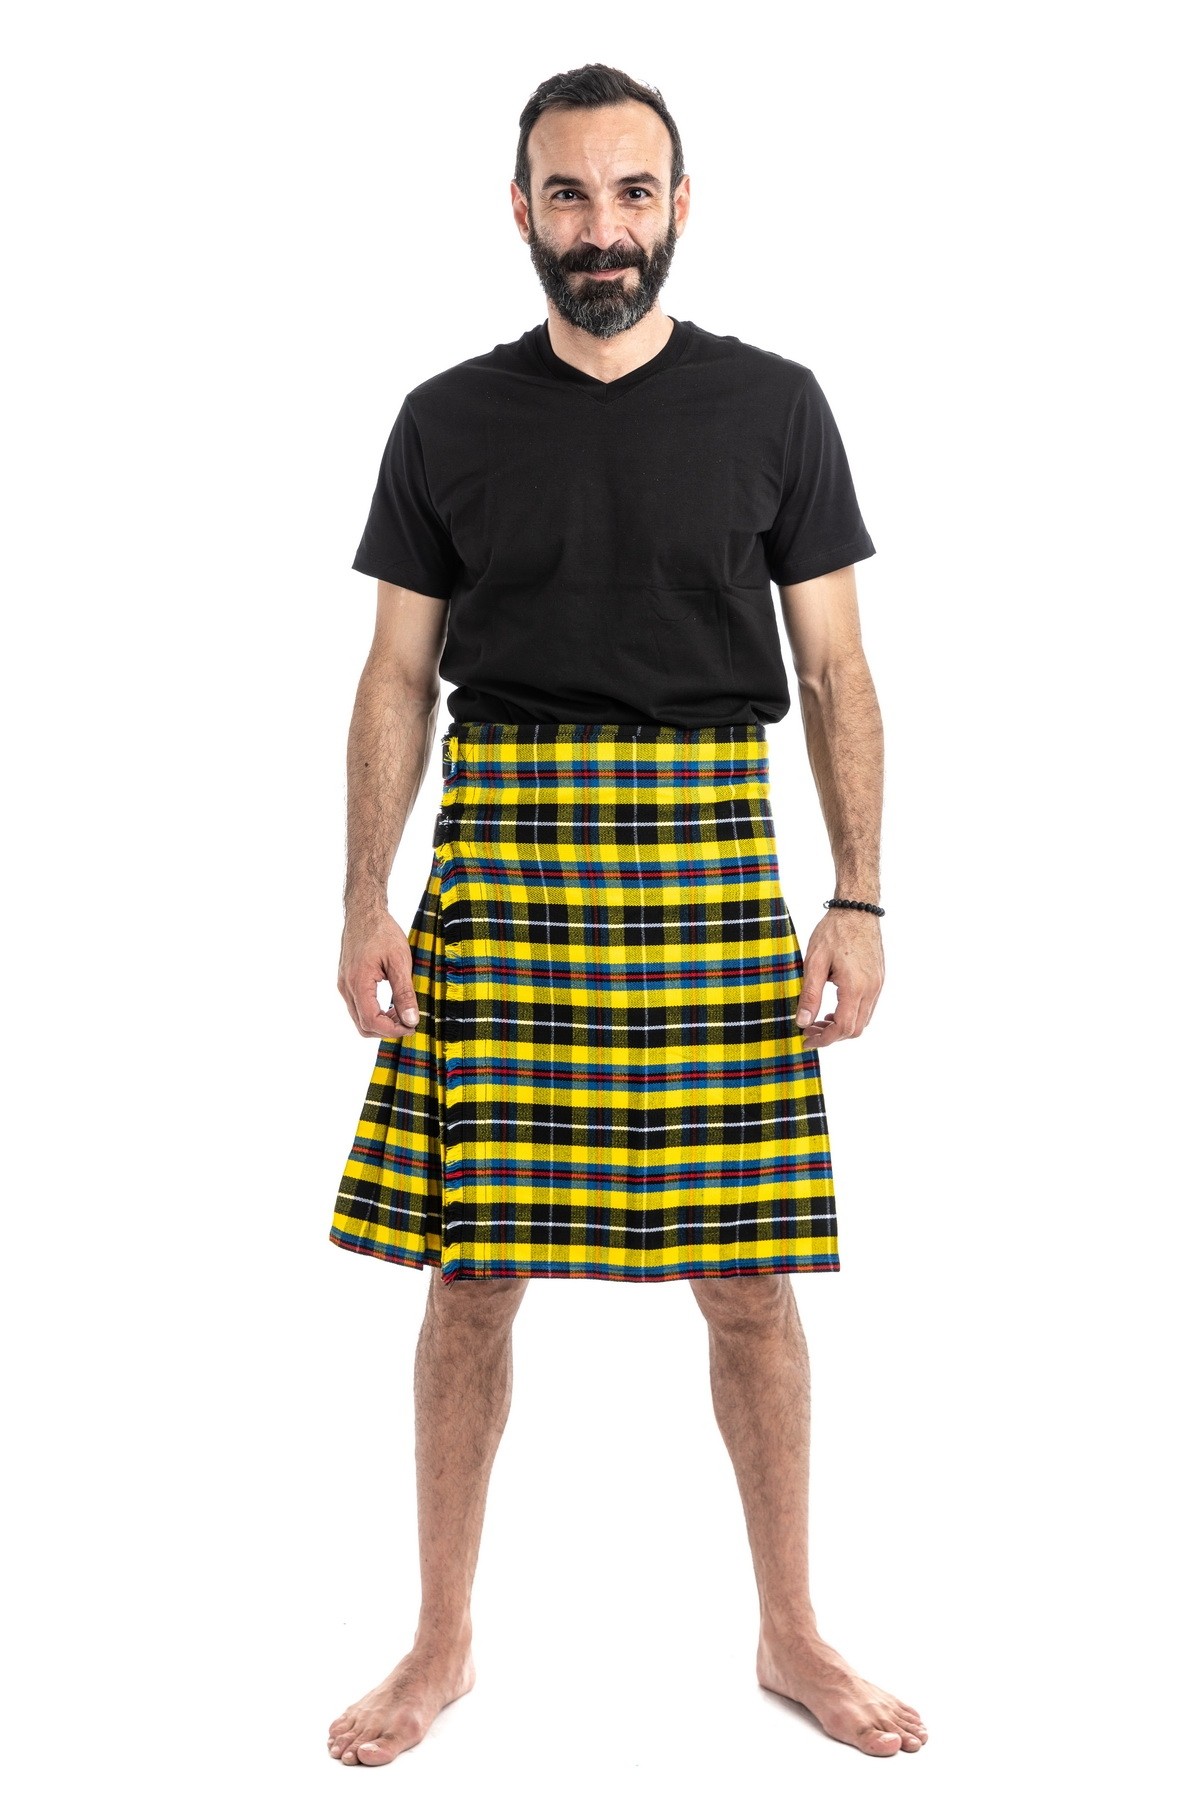 Scottish Cornish Tartan Pleated to Stripes Highland Traditional Active Men Kilts 